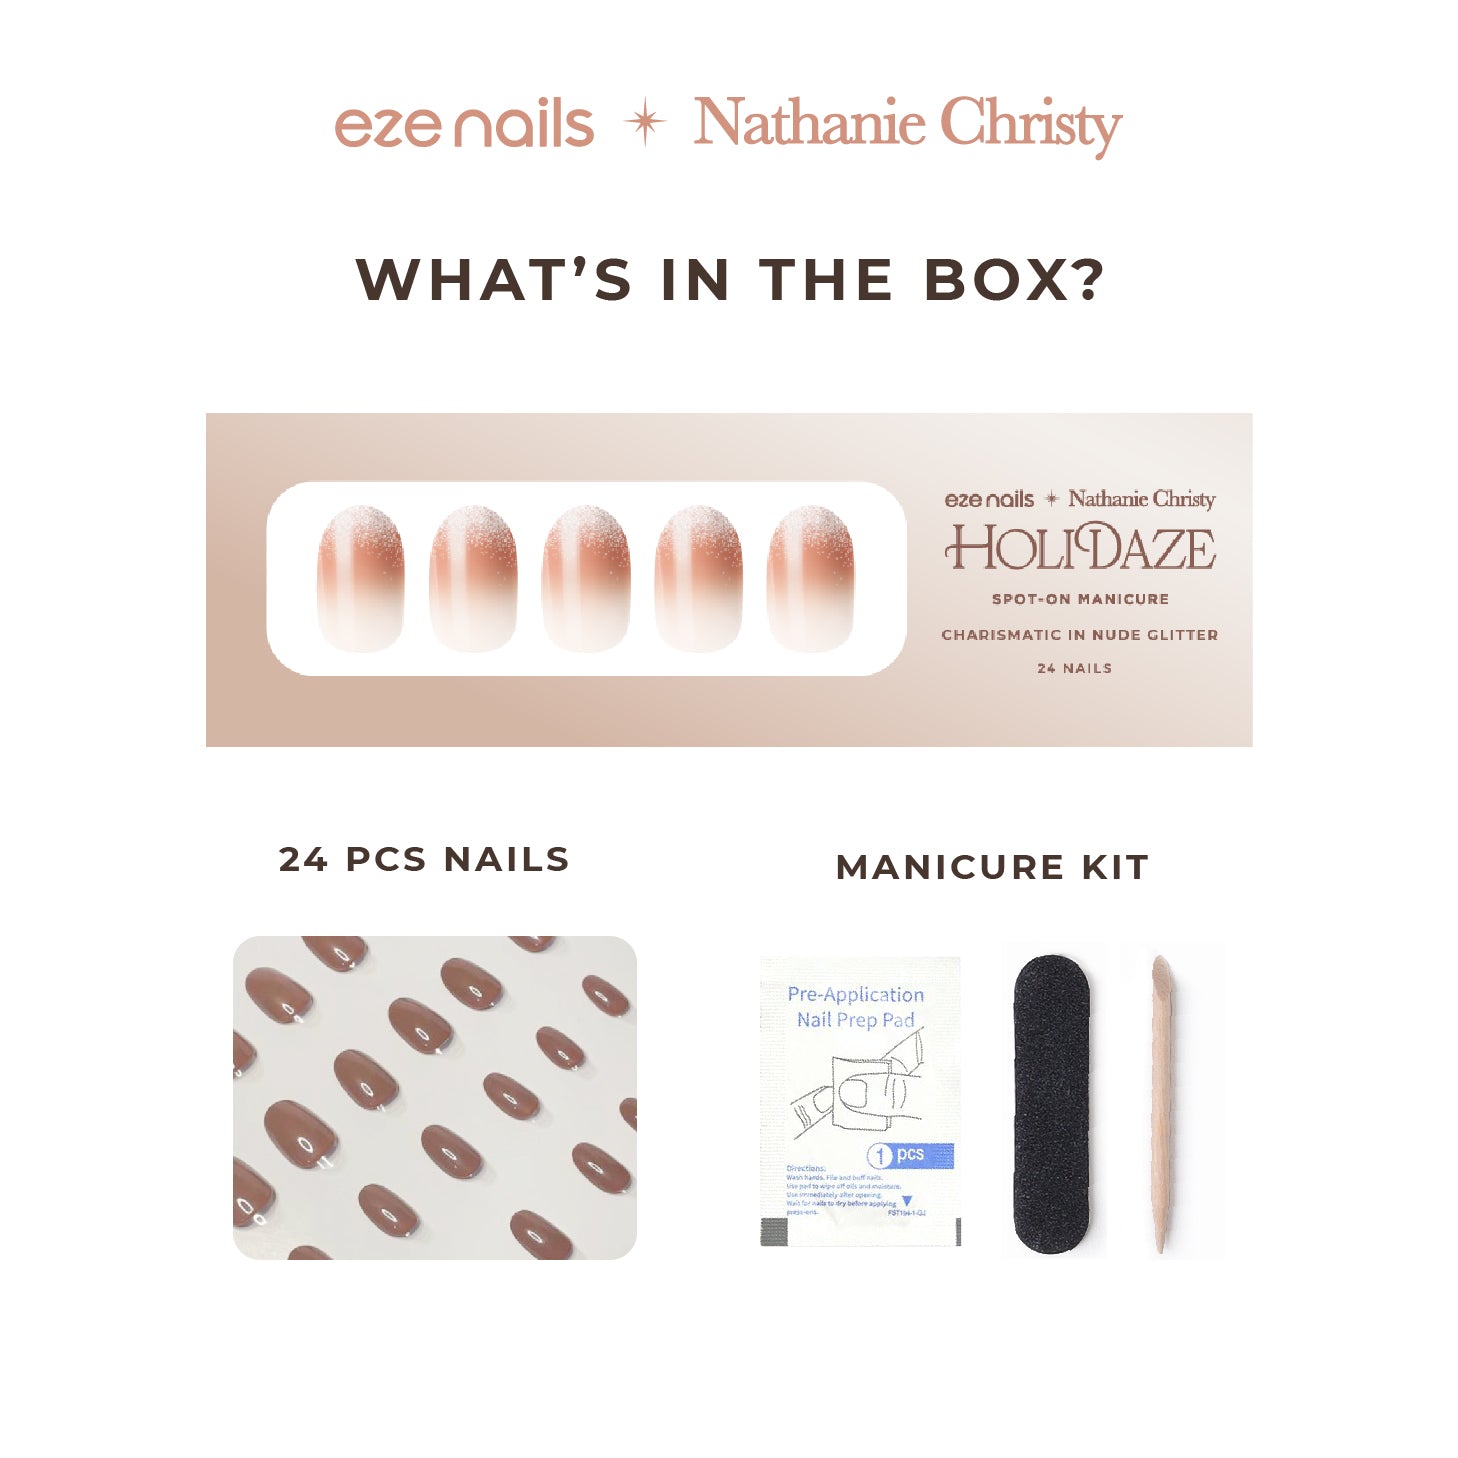 Eze Nails x Nathanie Christy - Charismatic in Nude Glitter Spot on Manicure (Kuku Tempel Tangan)